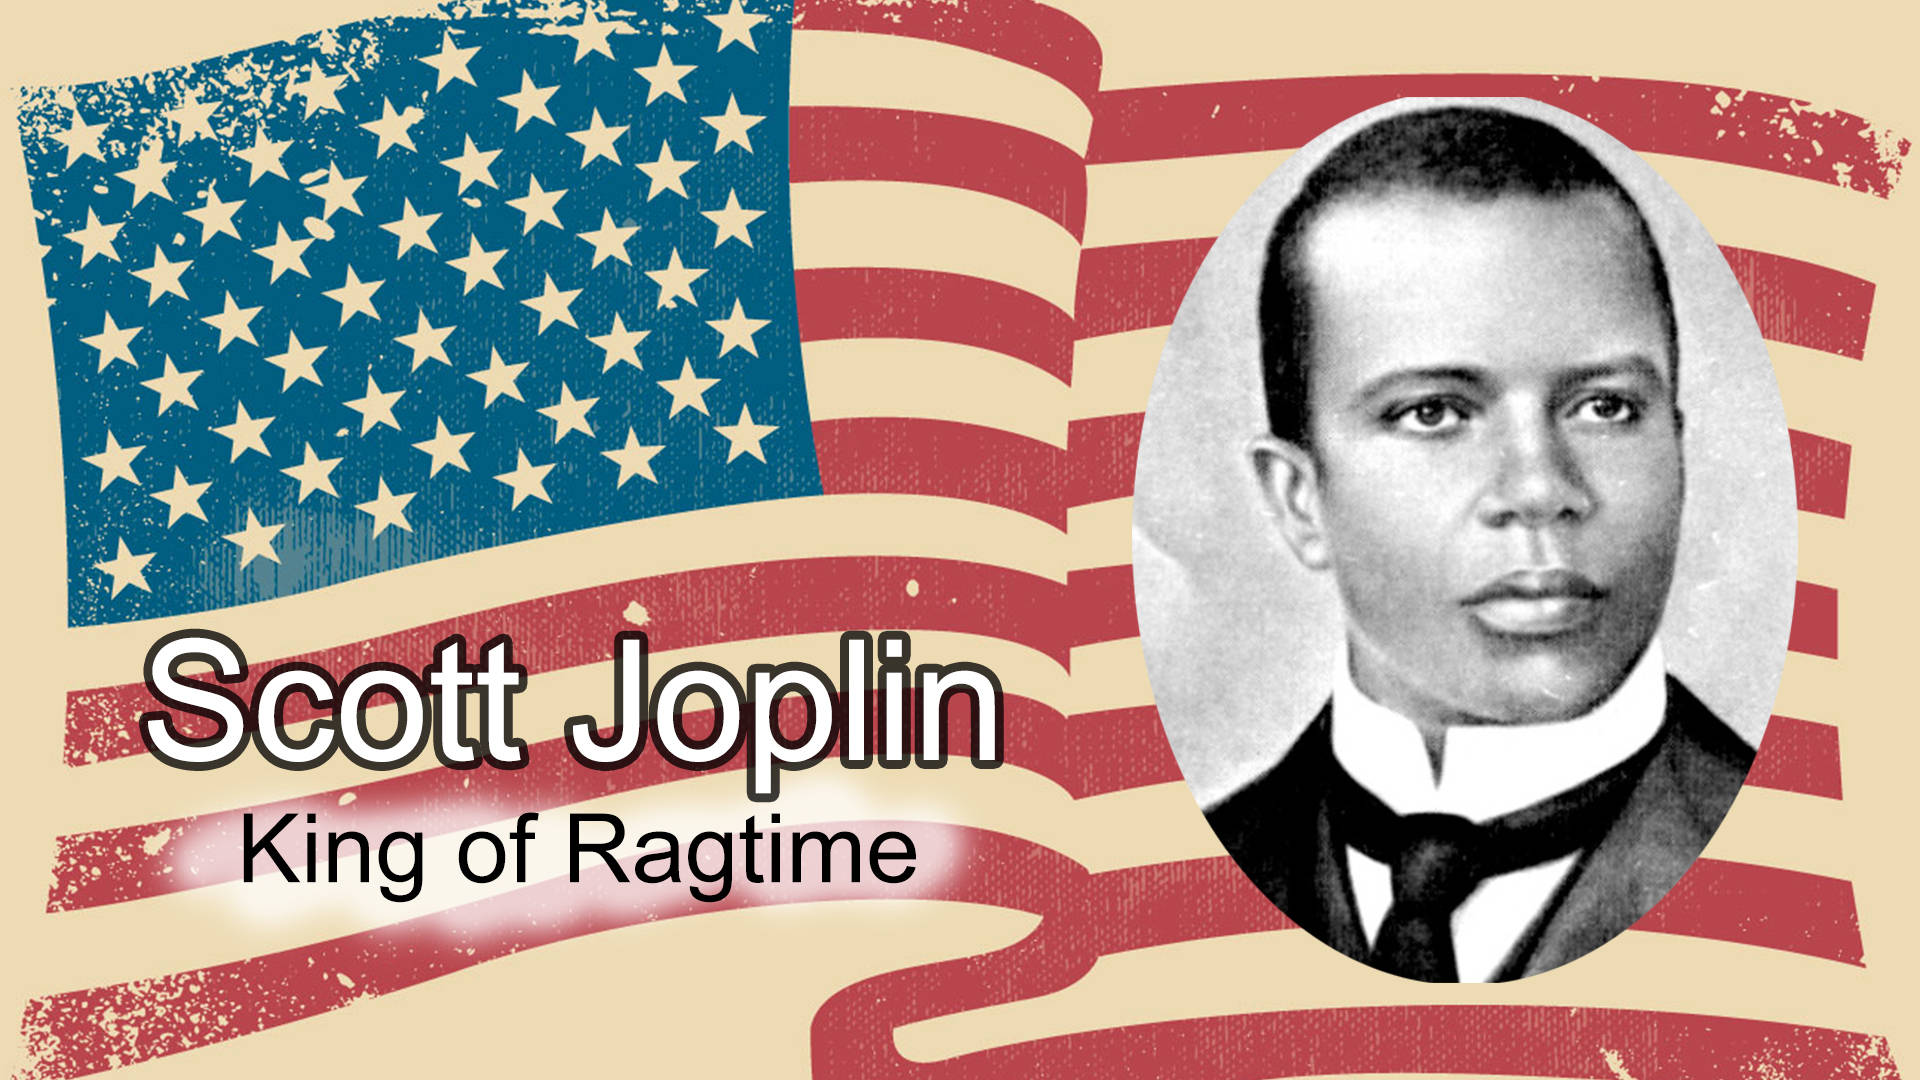 Scott Joplin Portrait Against American Flag Background